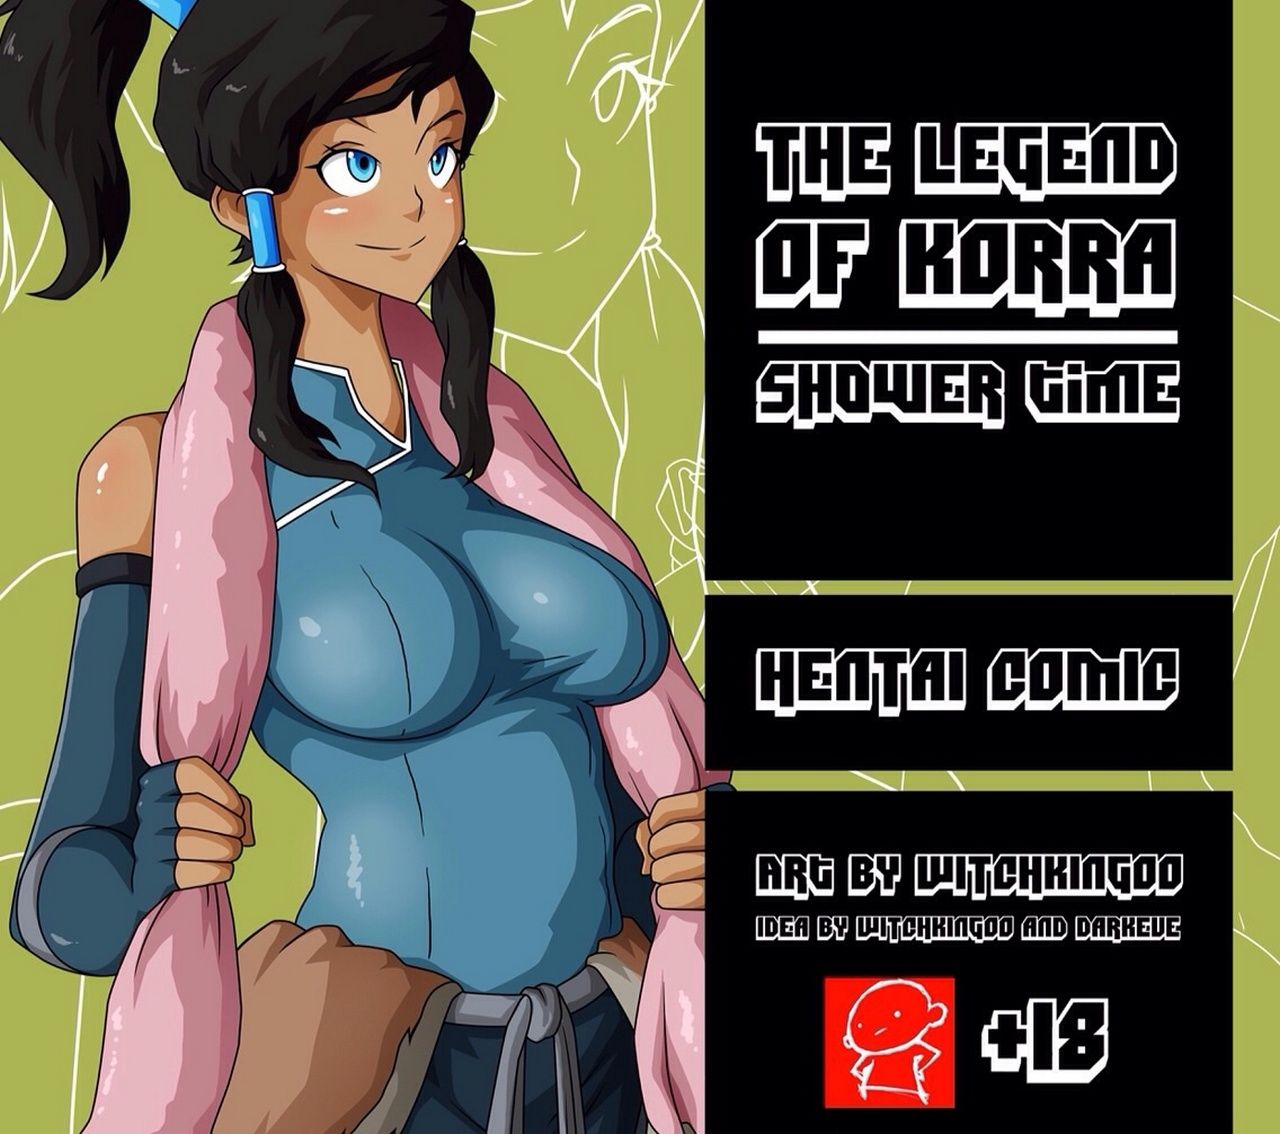 The Legend Of Korra 1 - Shower Time page 1